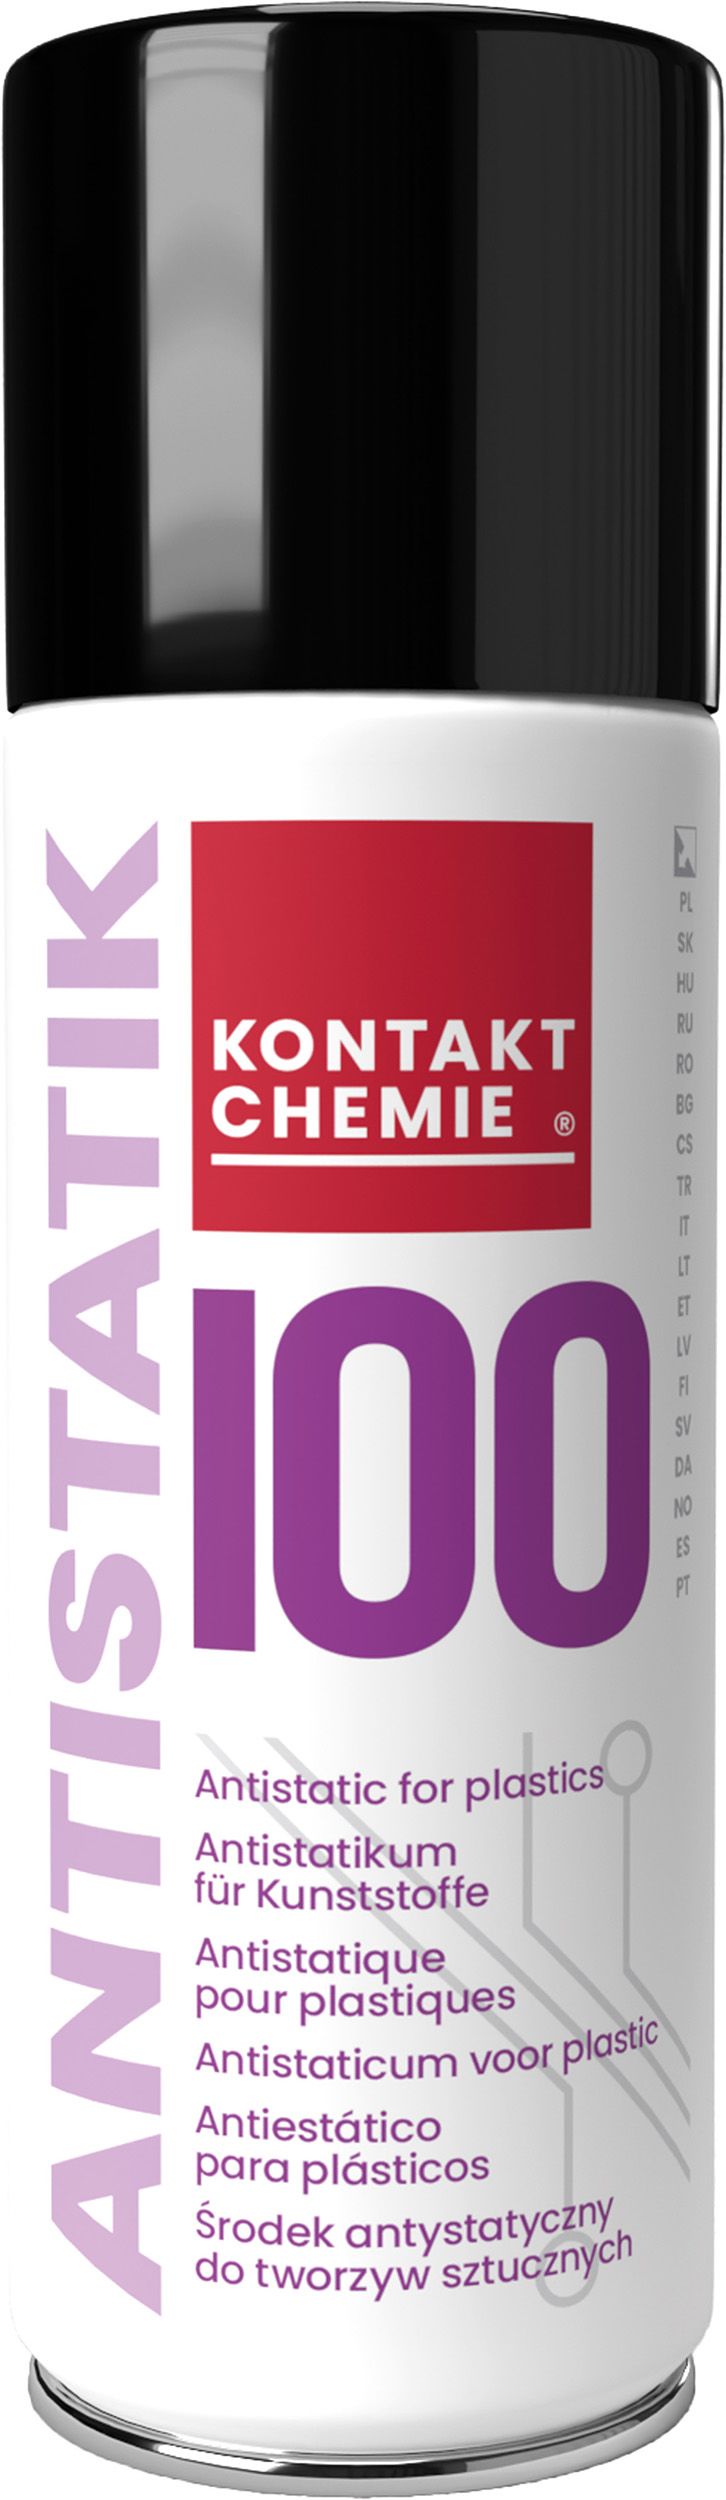 Kontakt Chemie 200ml Anti-Static Cleaner